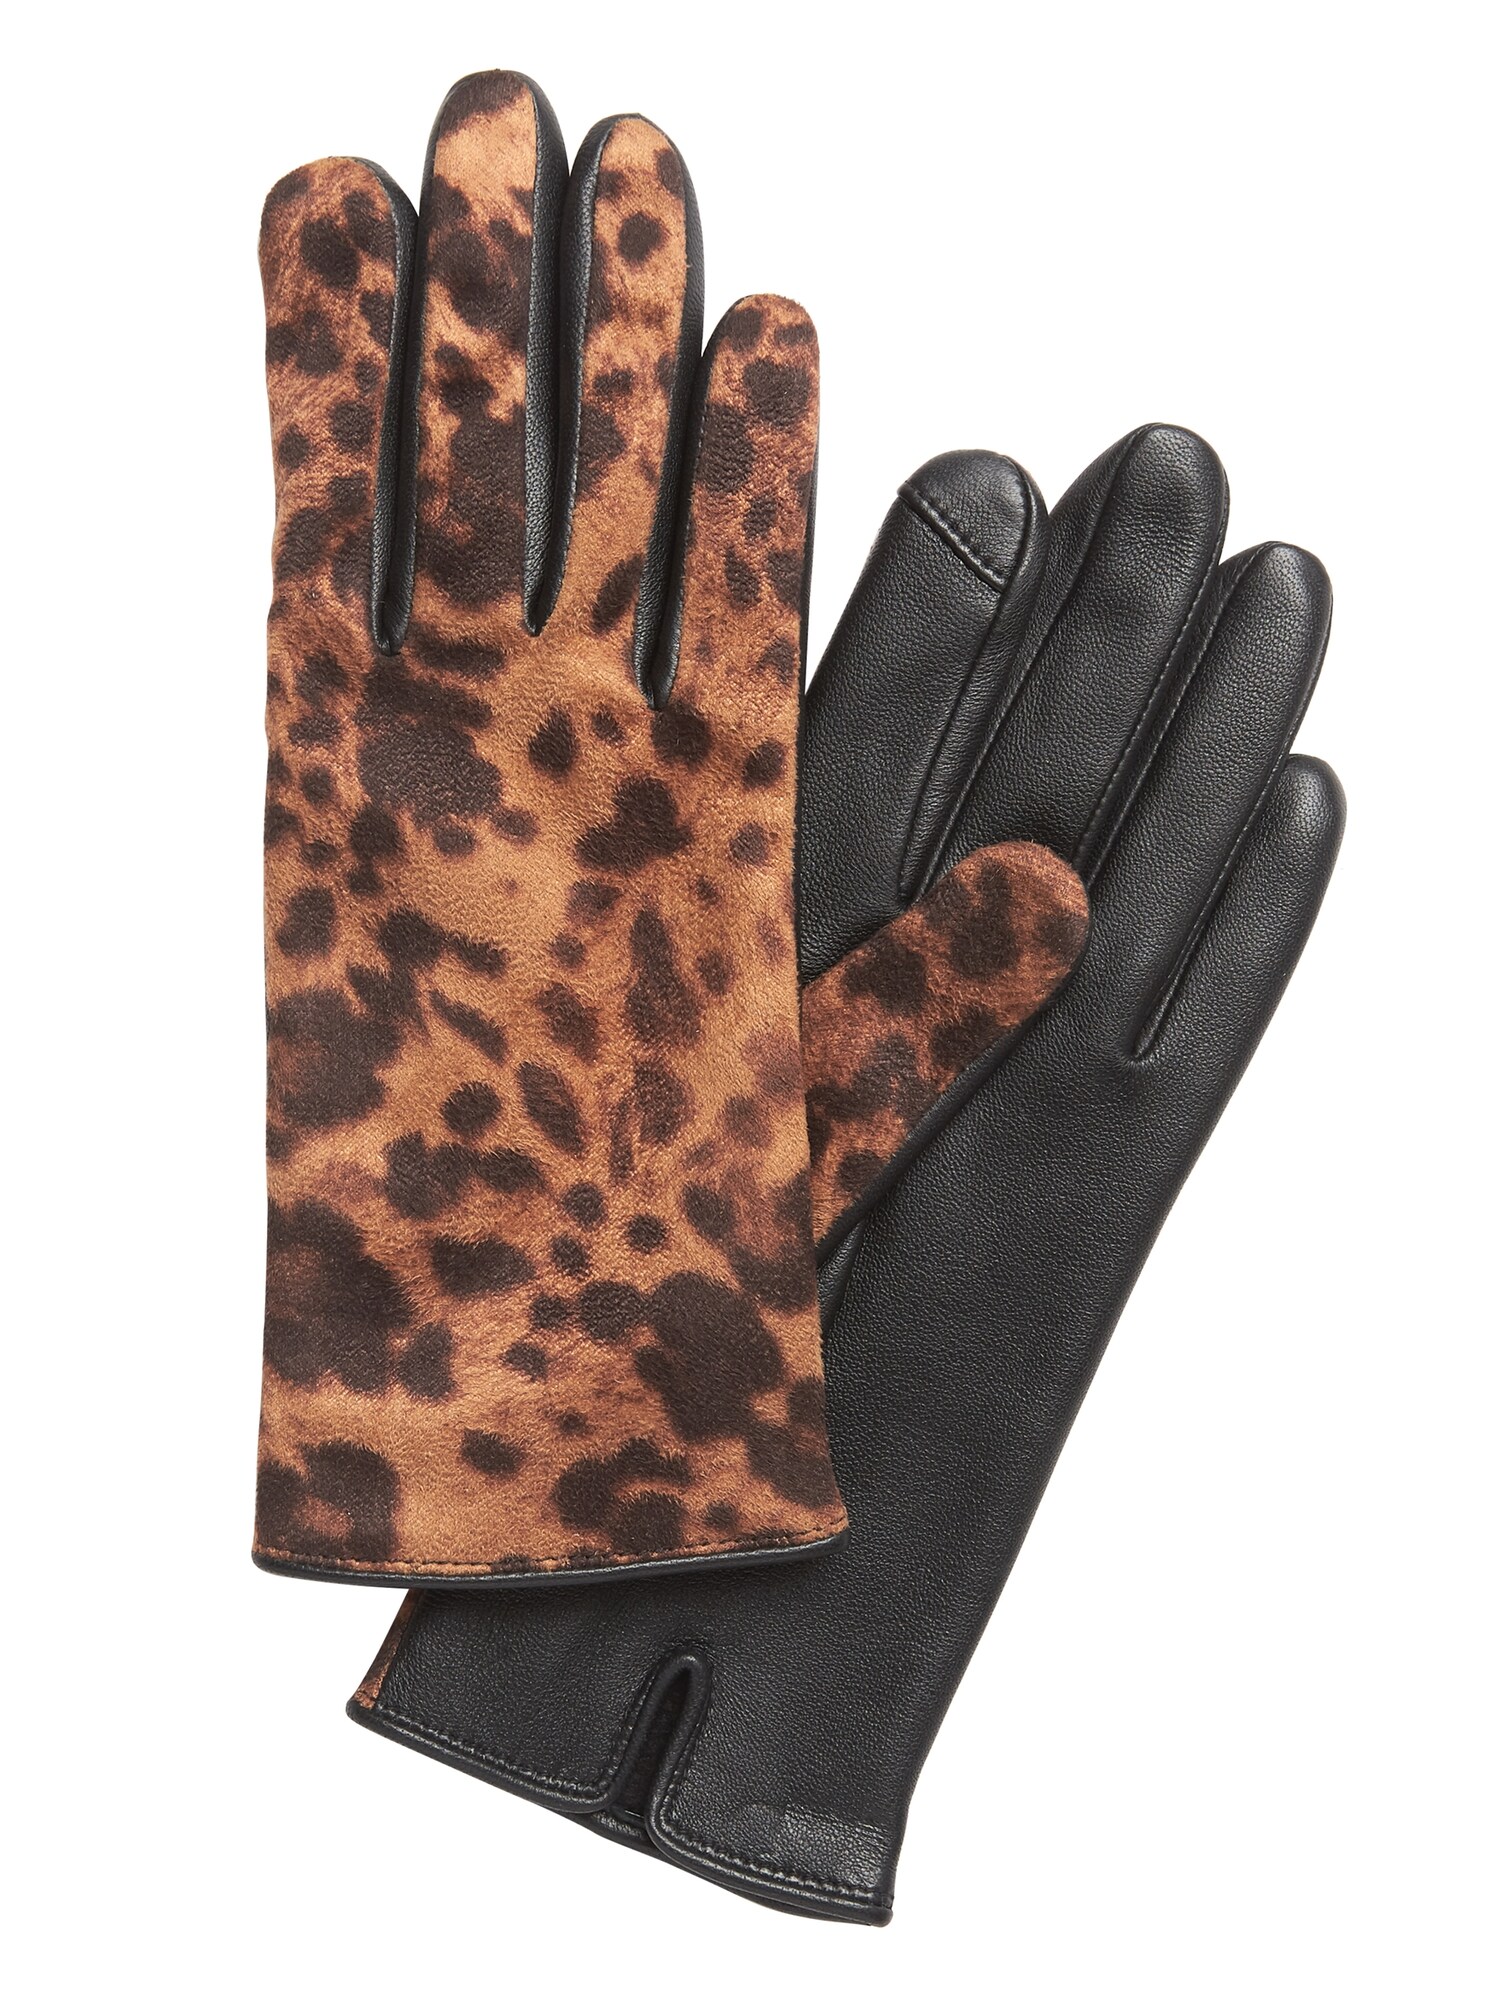 gap leather gloves